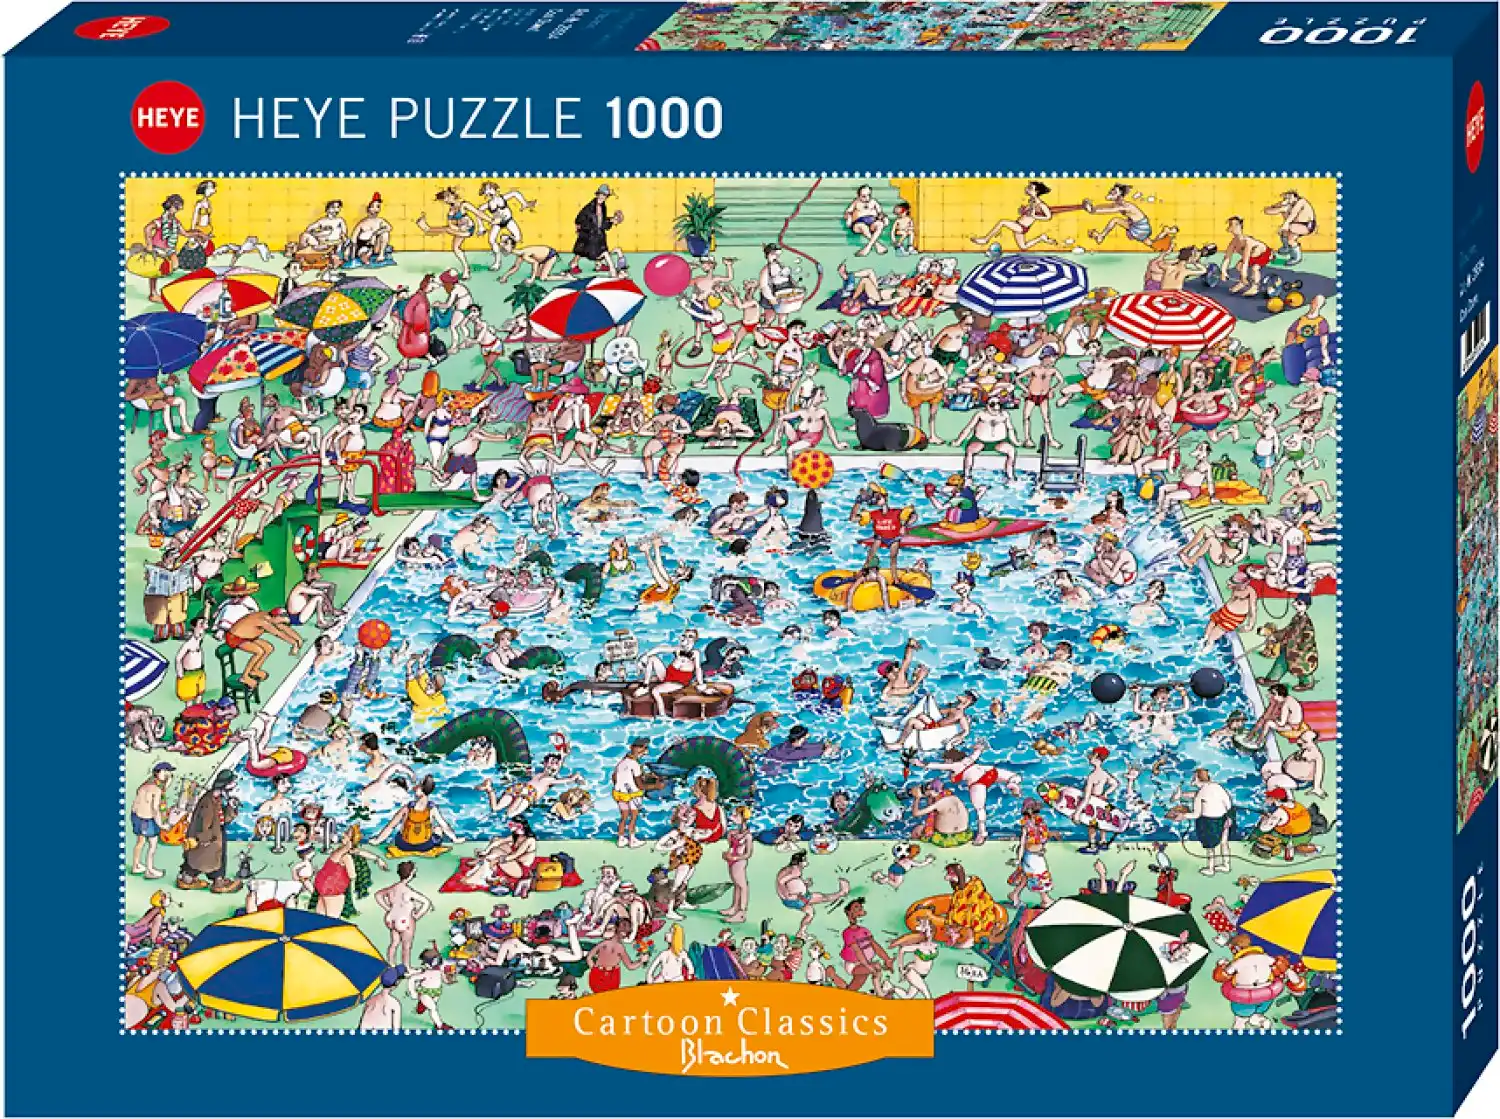 Heye - Cool Down Blachon Cartoon Classics Jigsaw Puzzle 1000 Pieces